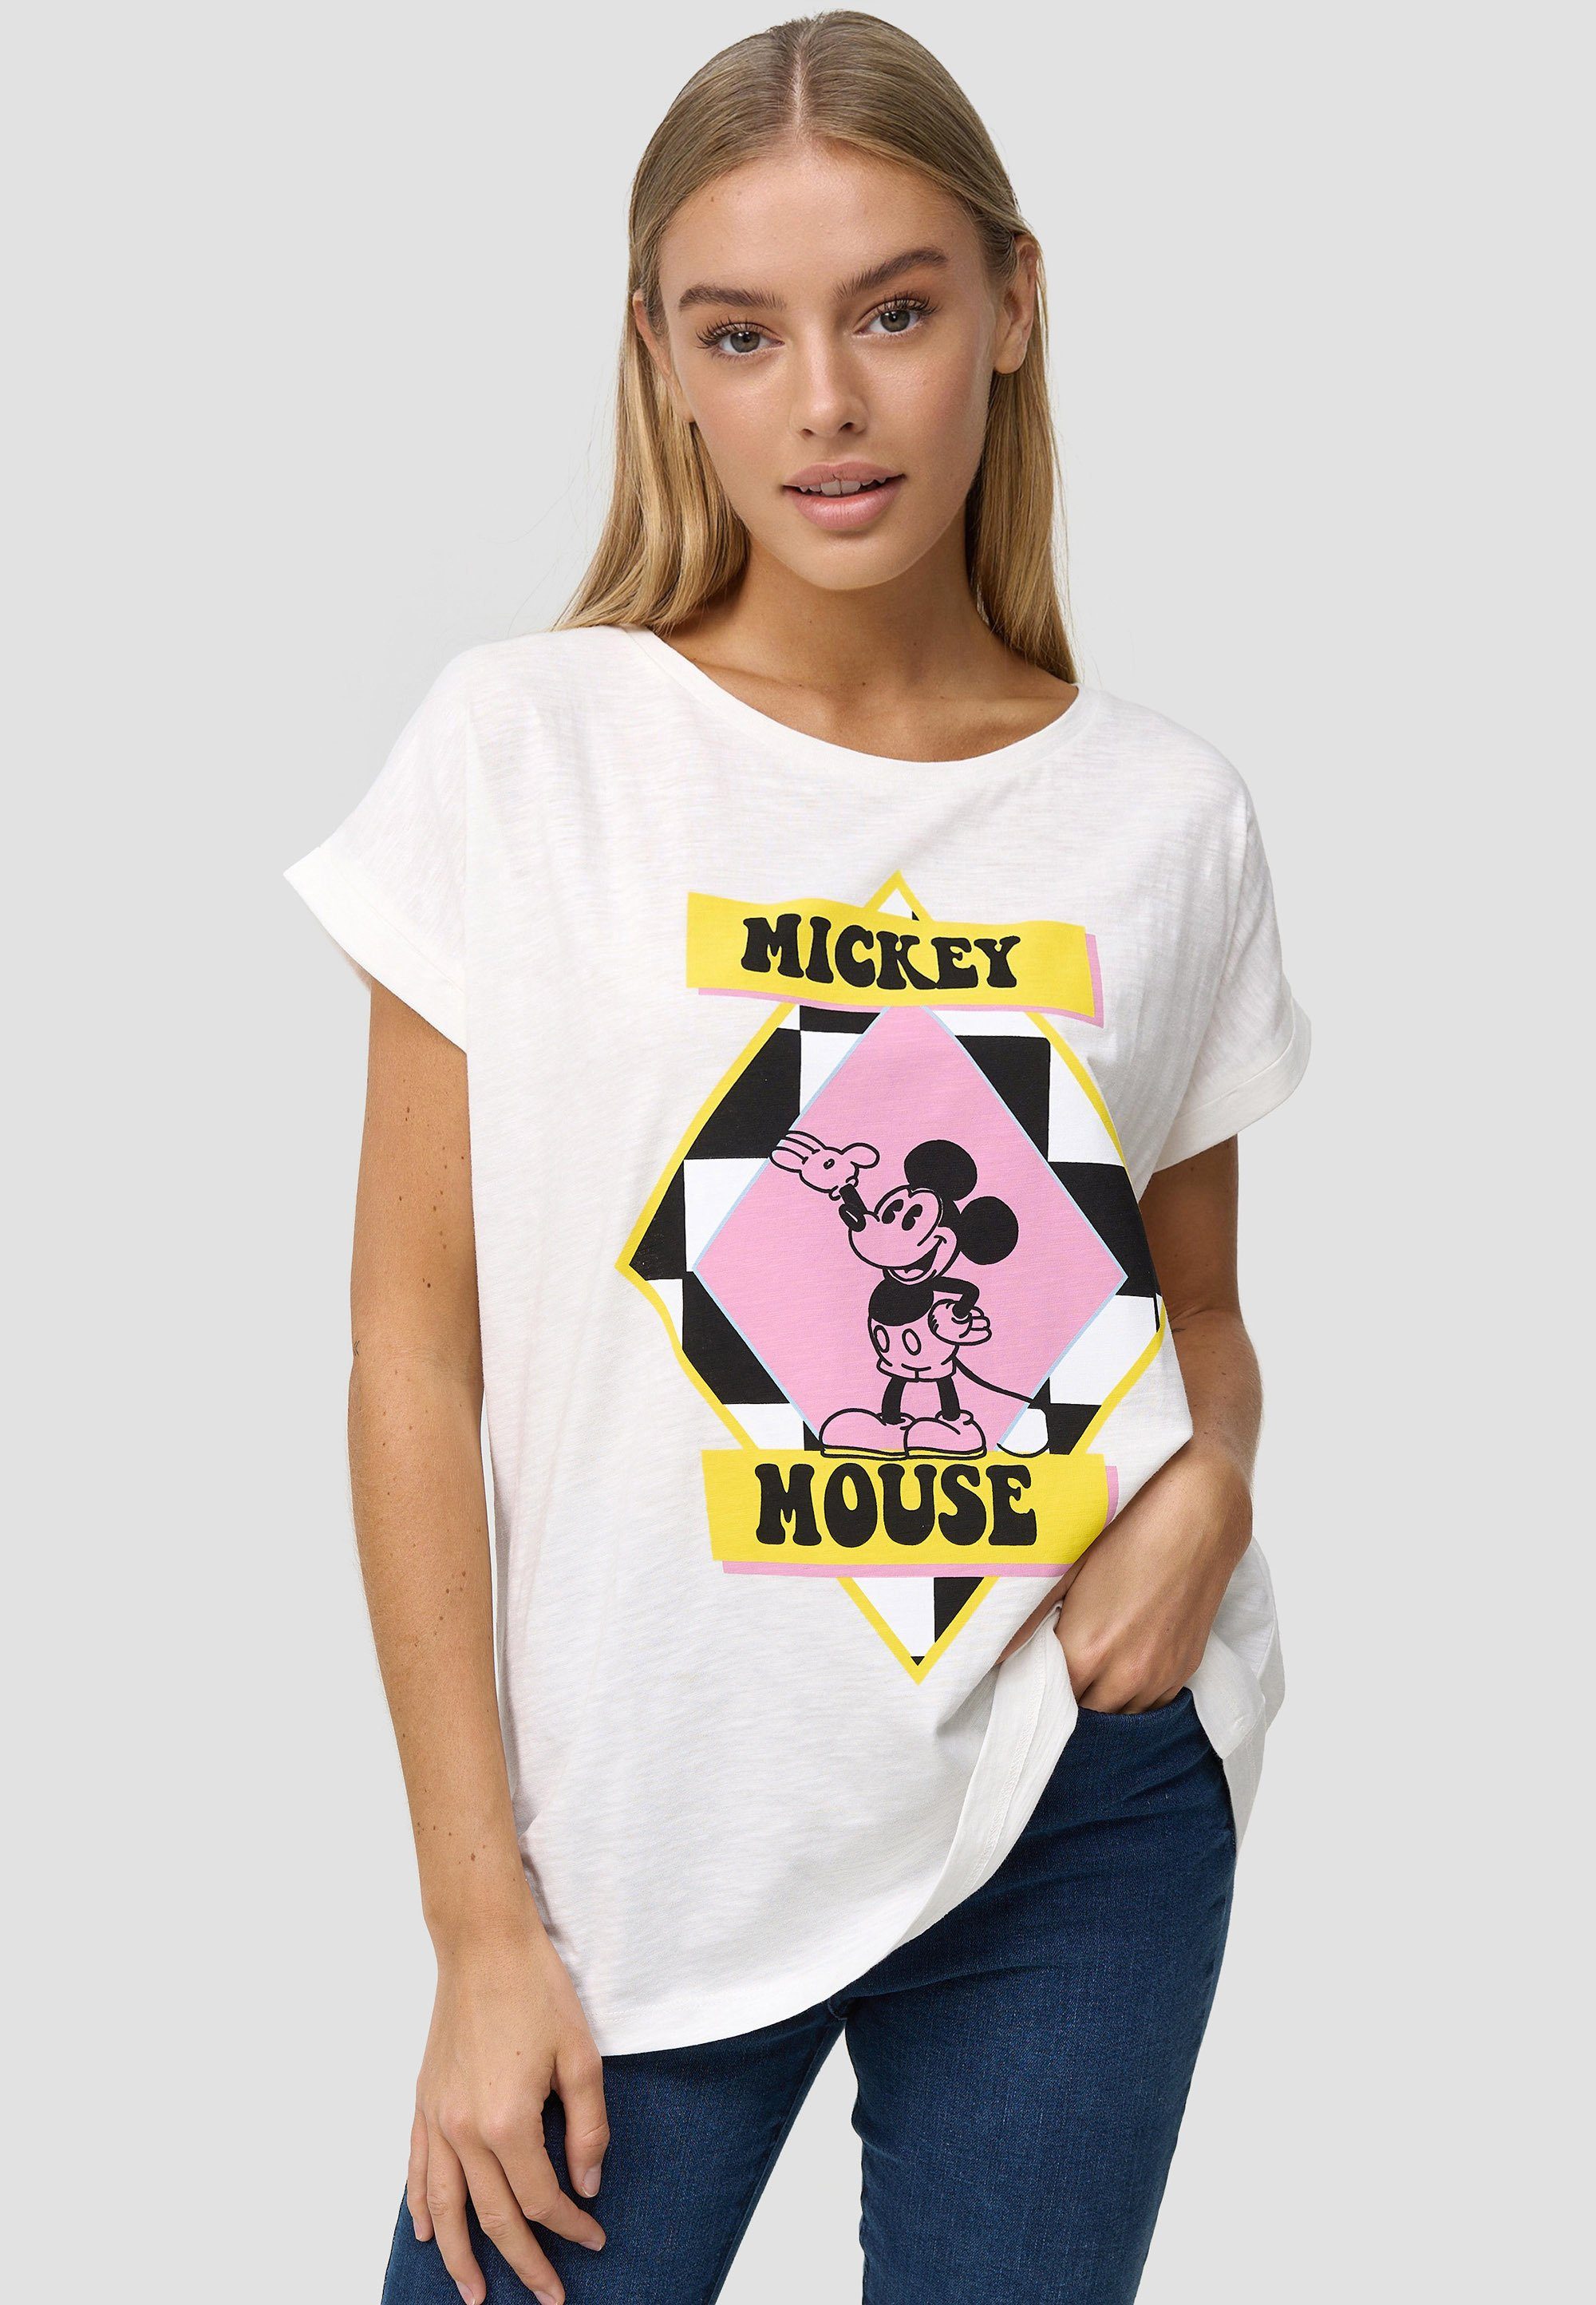 T-Shirt Bio-Baumwolle GOTS zertifizierte Pop Mouse Recovered Colour Mickey